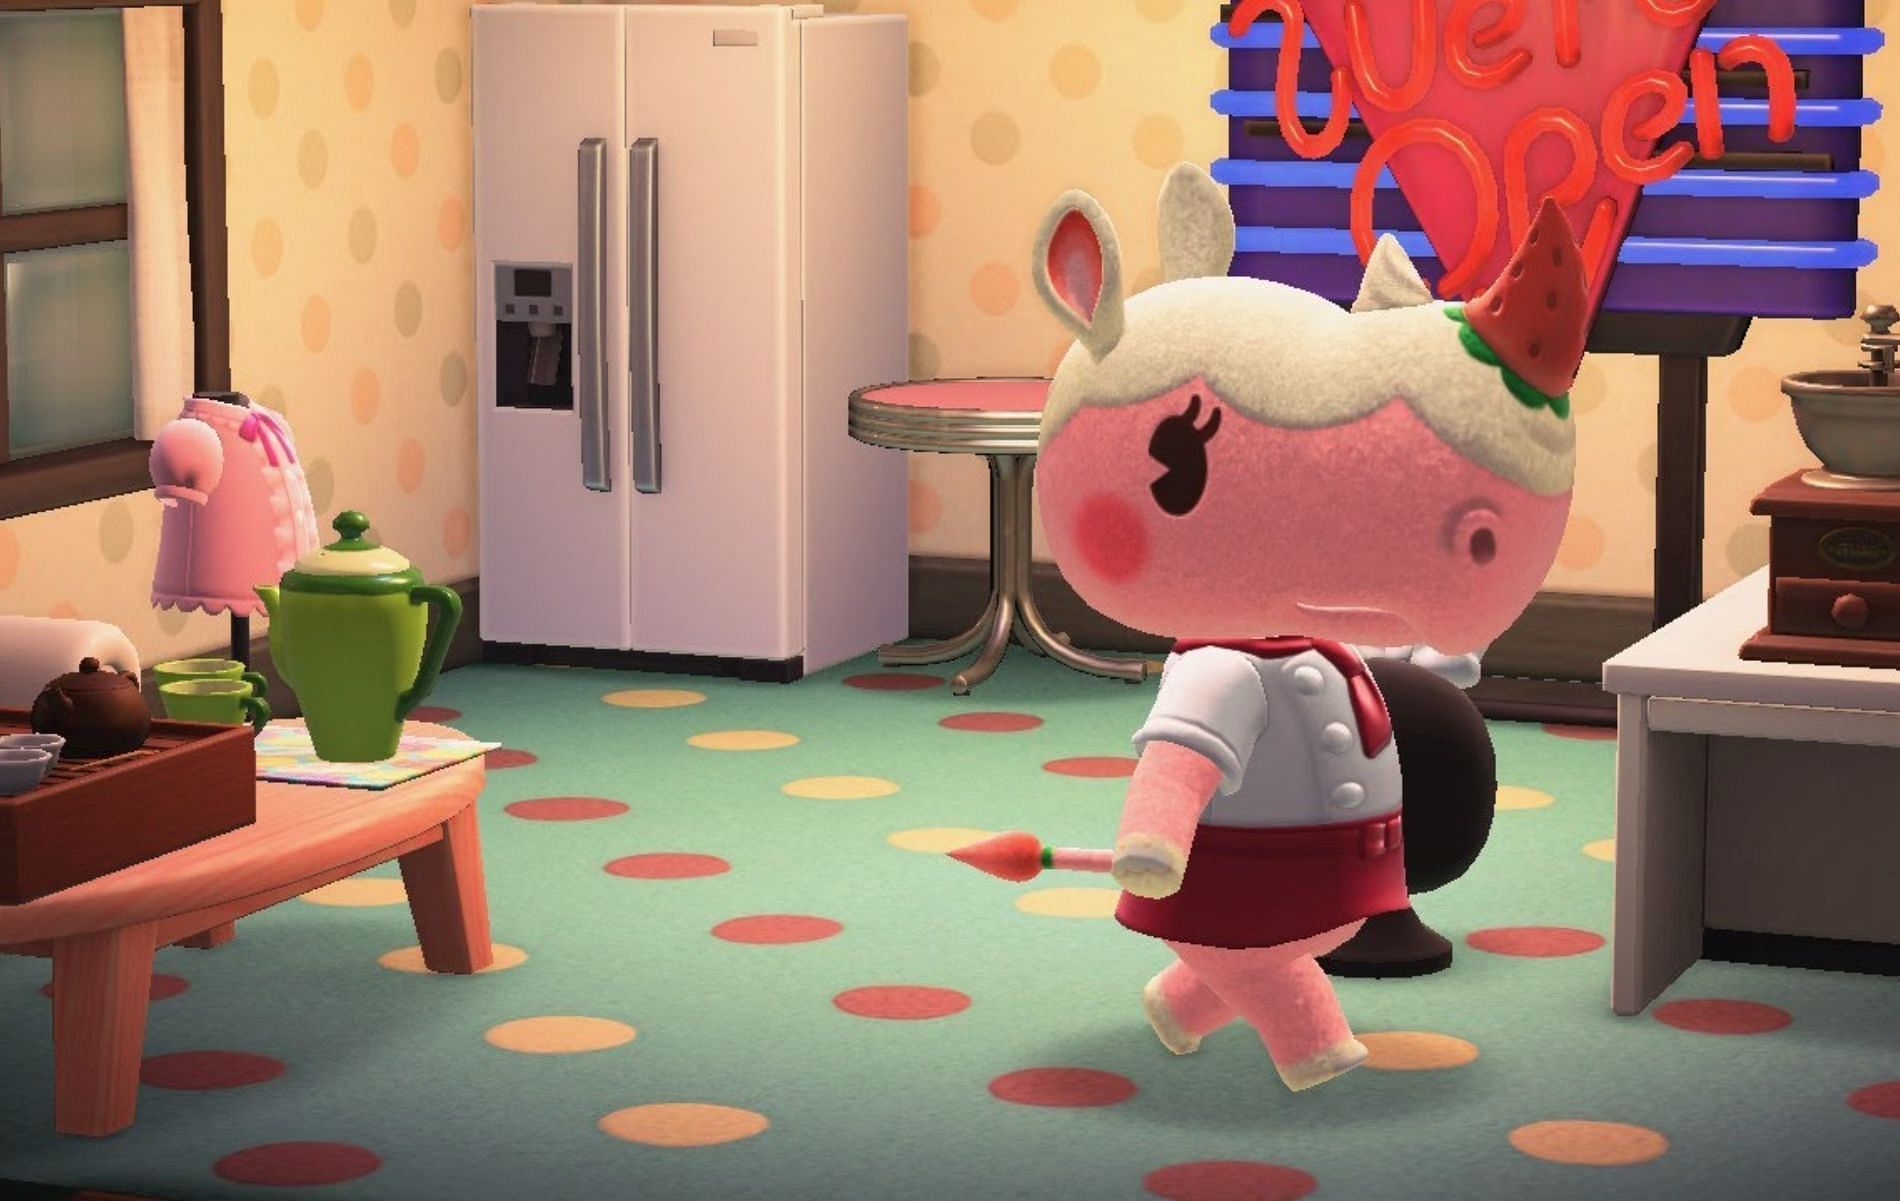 Merengue is one of the friendliest villagers in Animal Crossing New Horizons (Image via GameChanelz/YouTube)